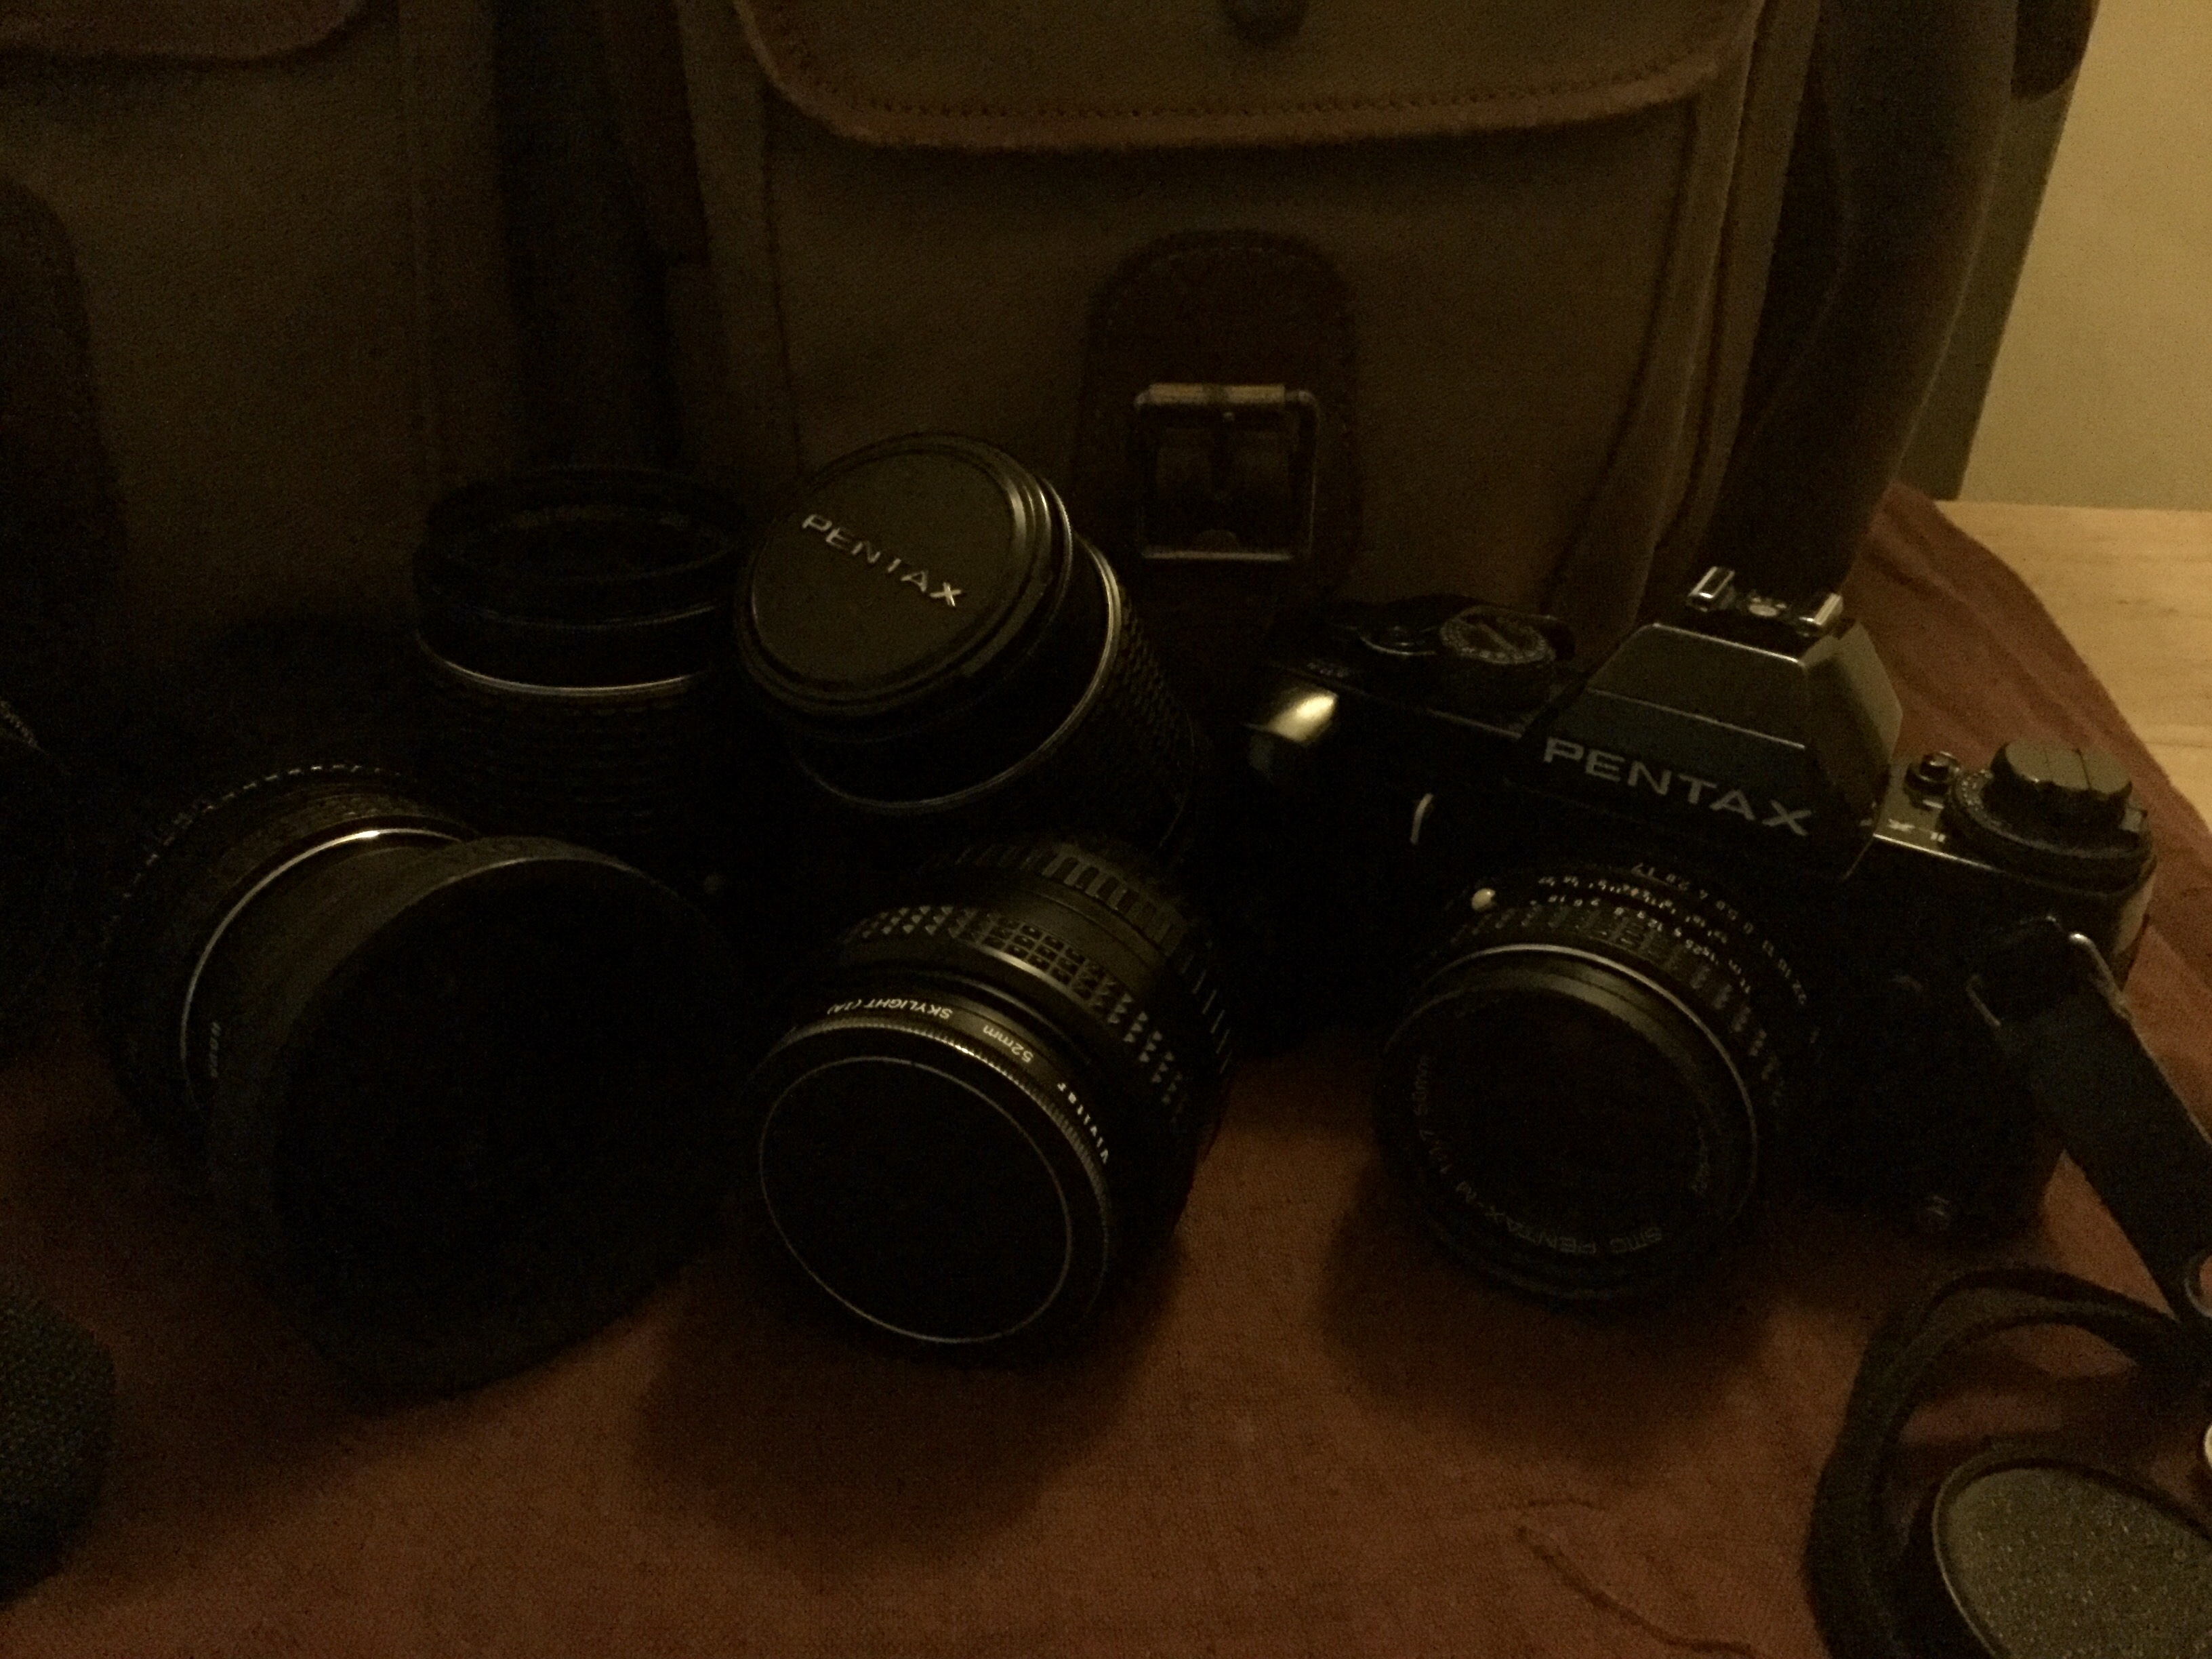 Iconic ownership. Billingham camera bag. Pentax LX SLR Film camera